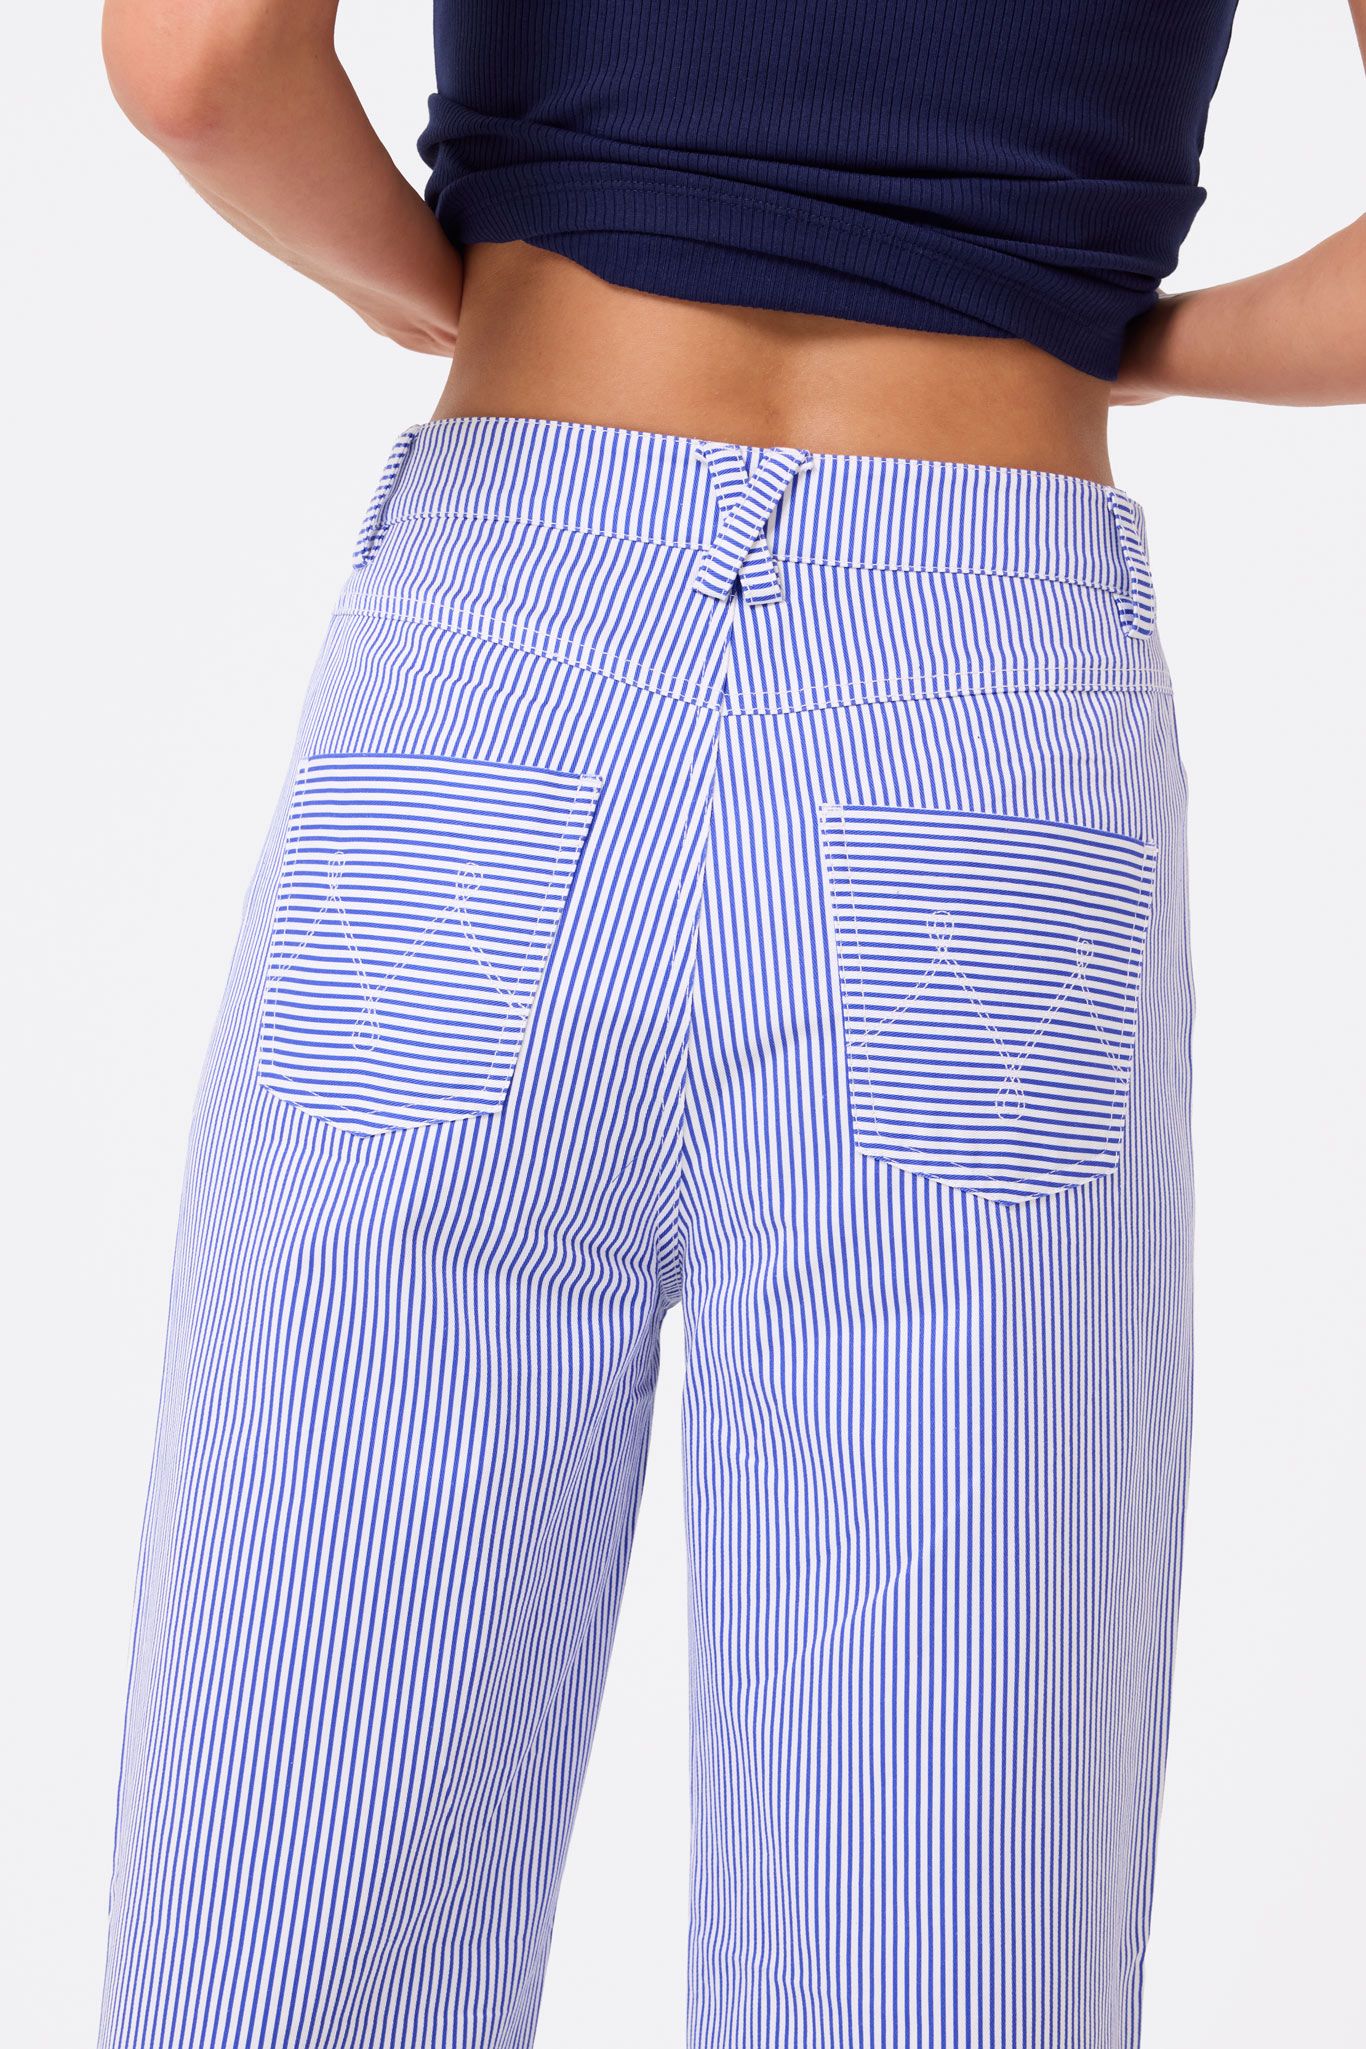 Twill Pant in Electric Blue Stripe | Terez